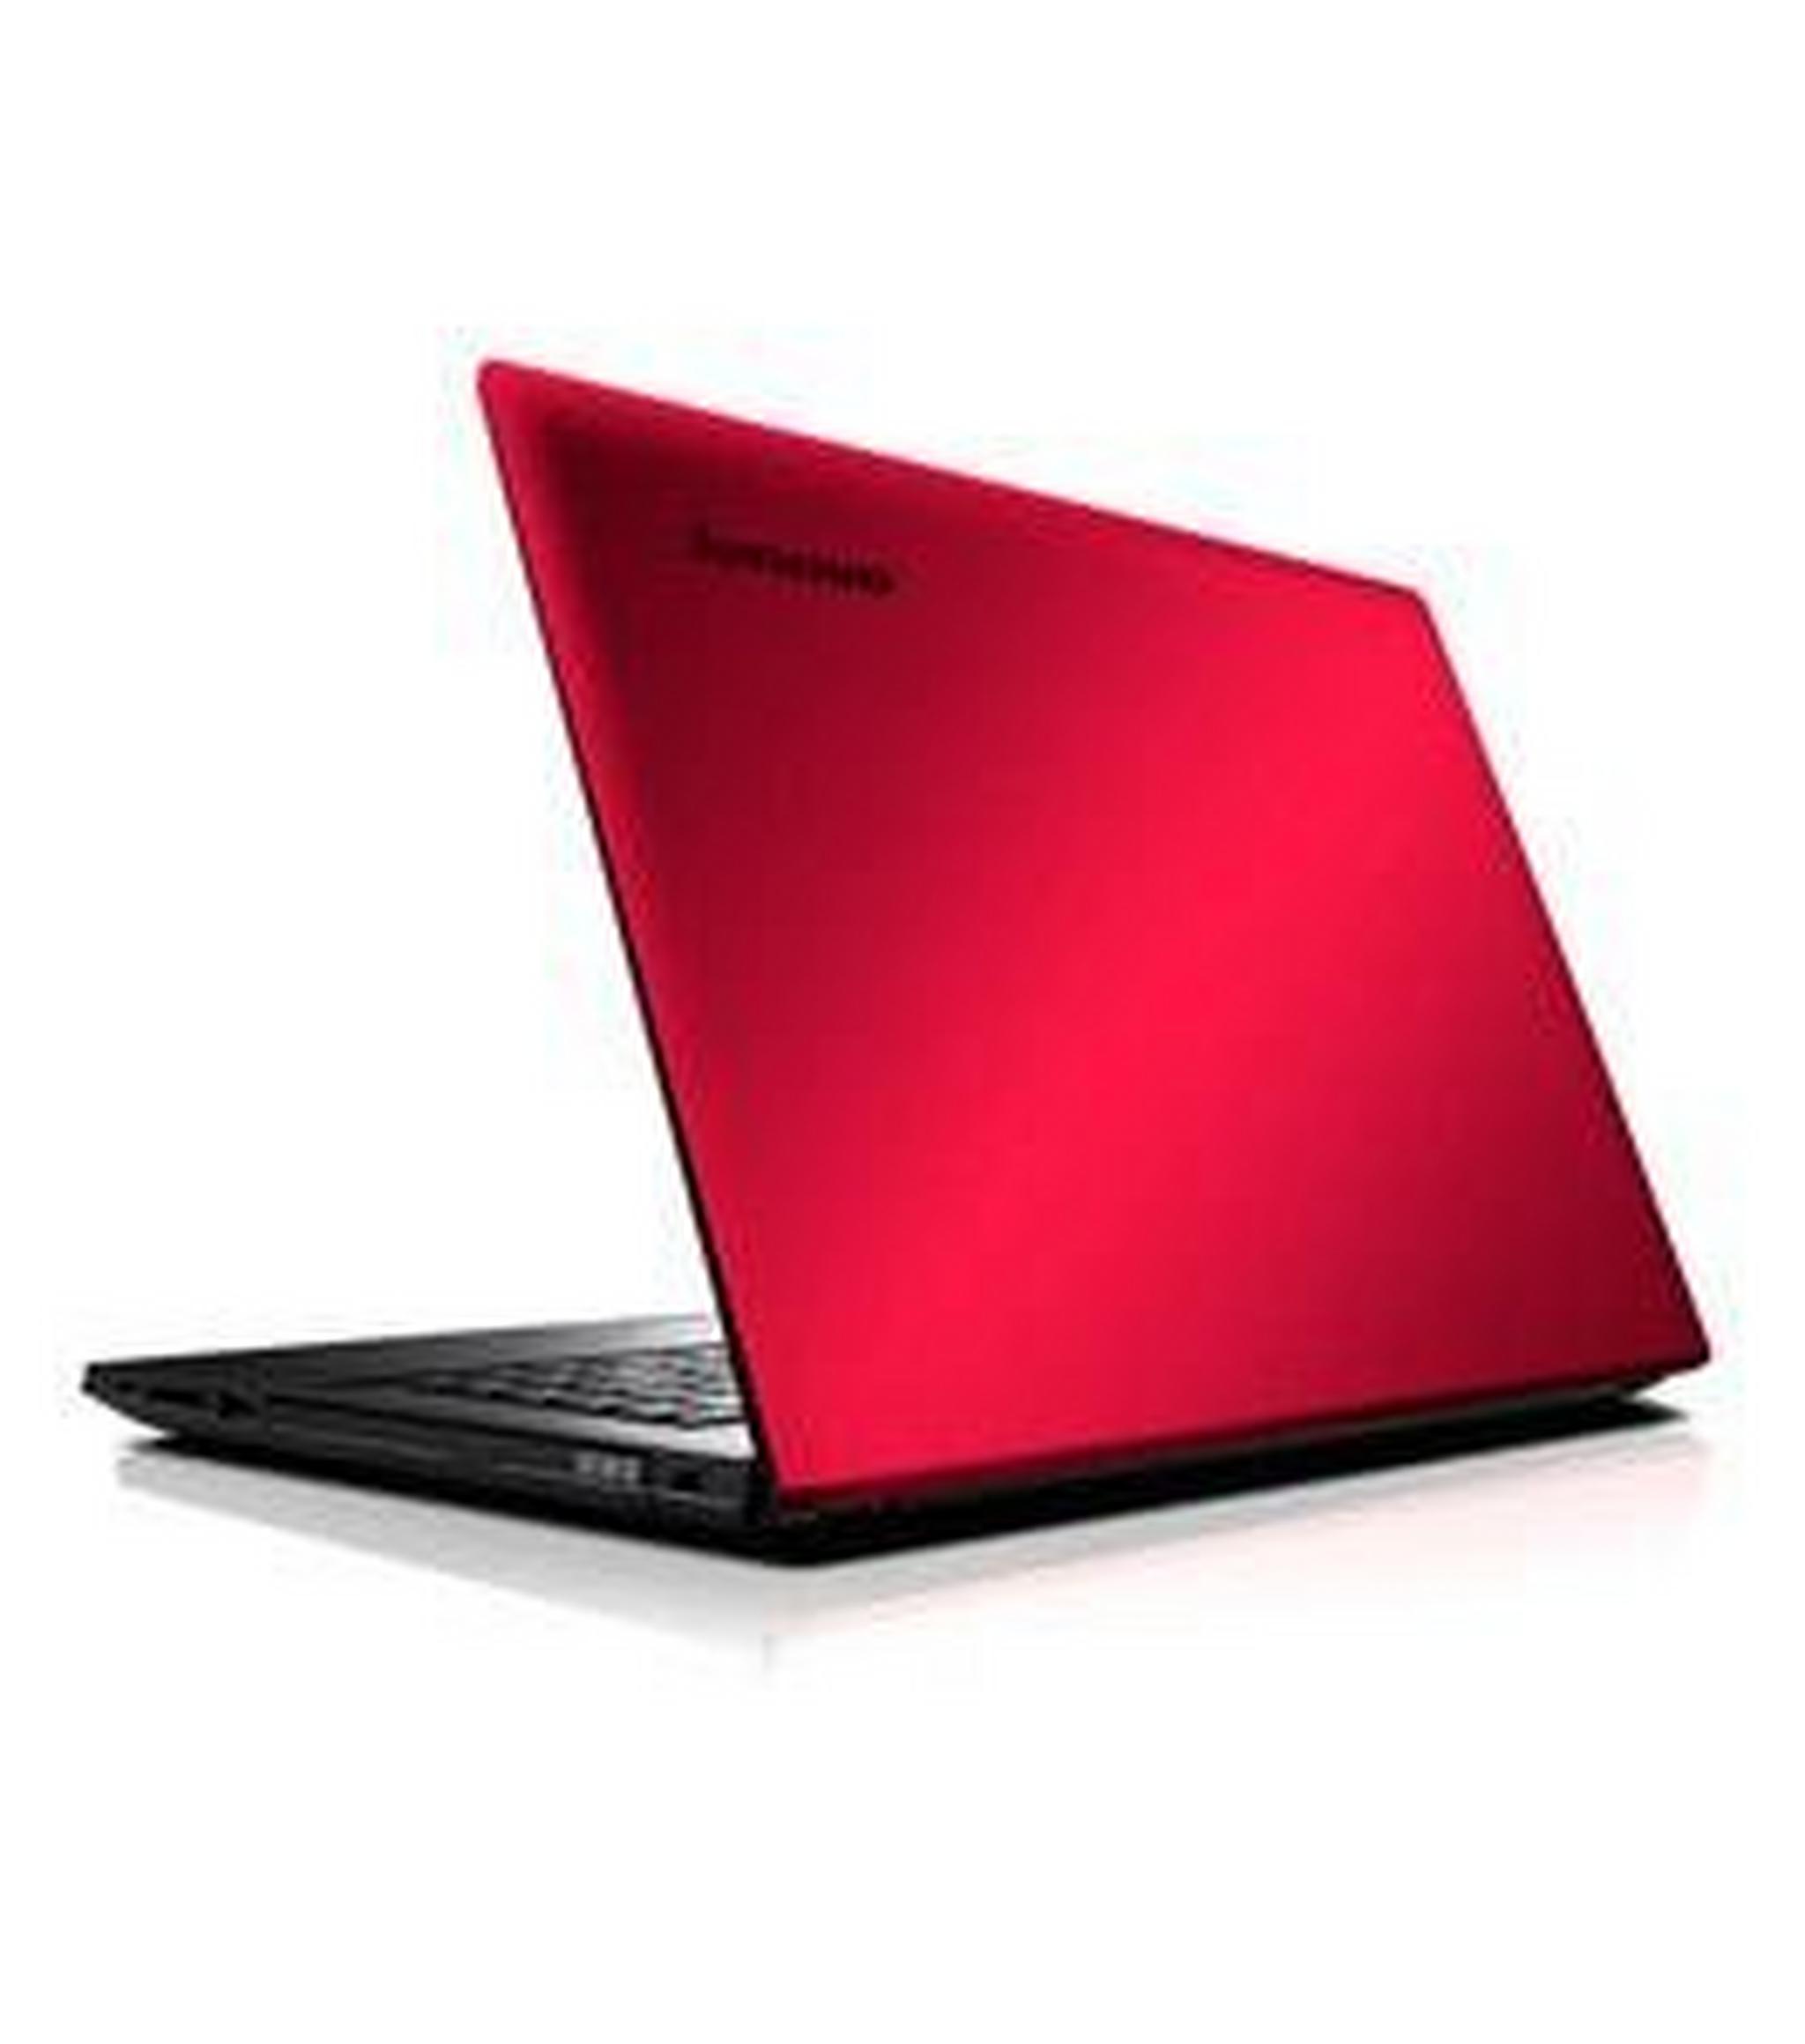 Lenovo G4080 Core i5 6GB RAM, 1TB HDD, 14-inch Laptop - Red